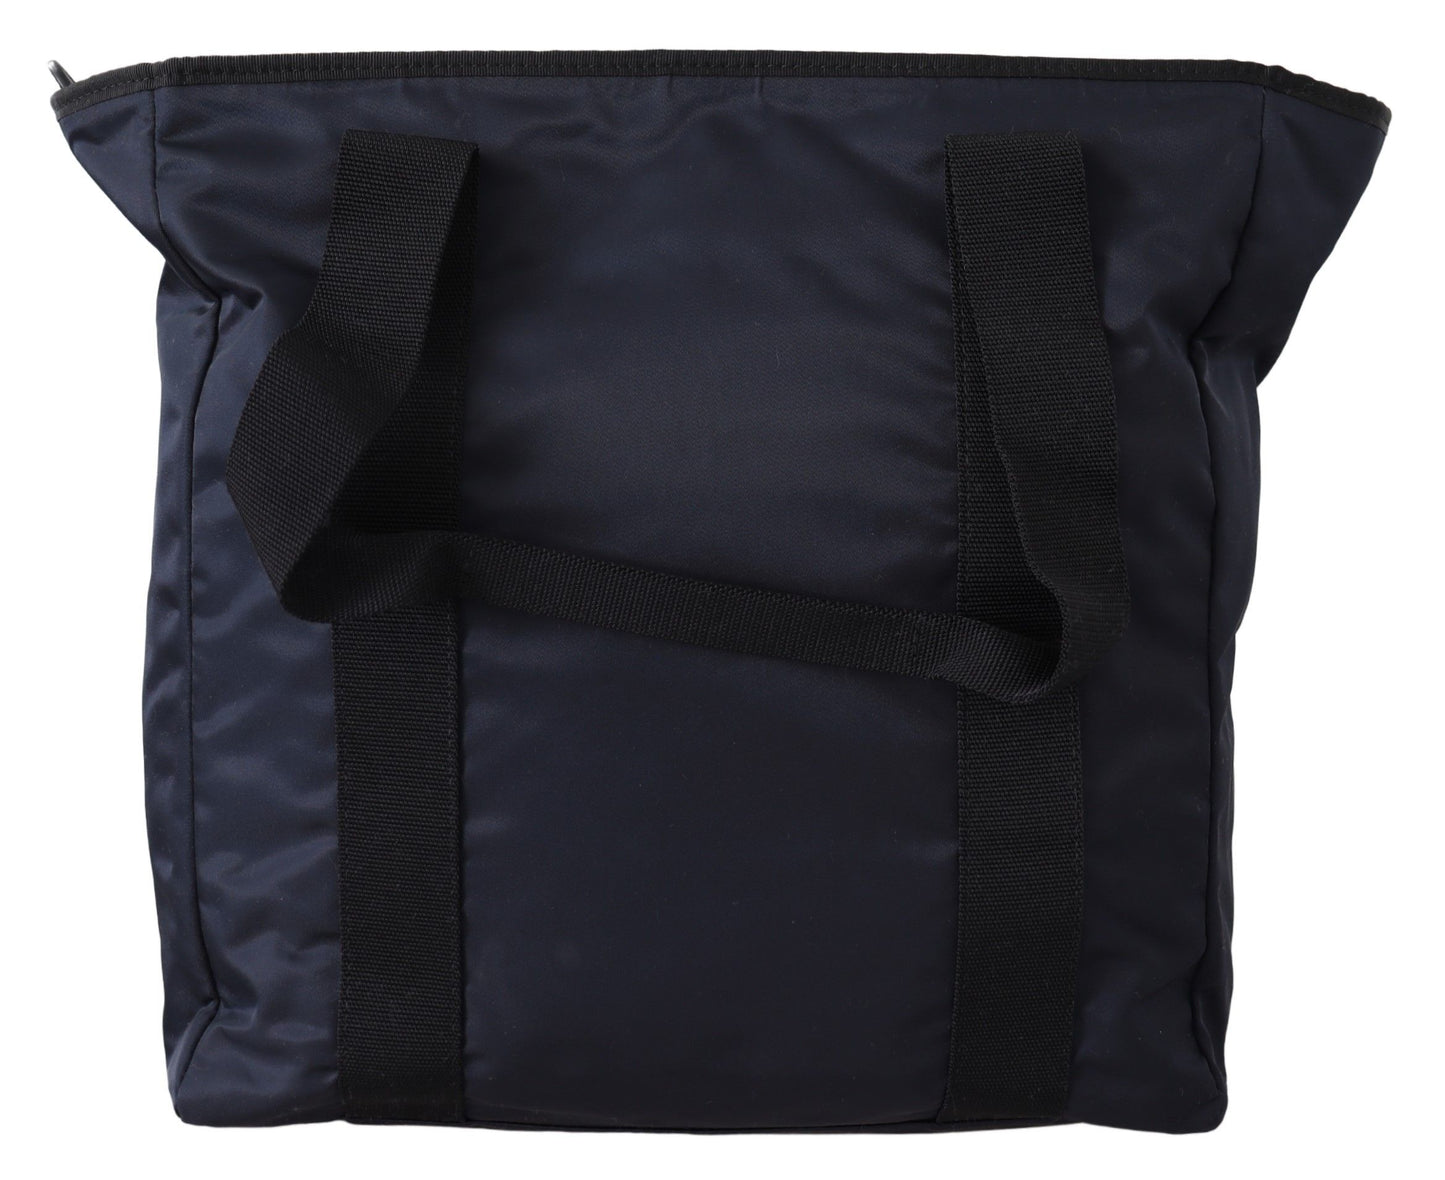 Blue Nylon Tote Bag